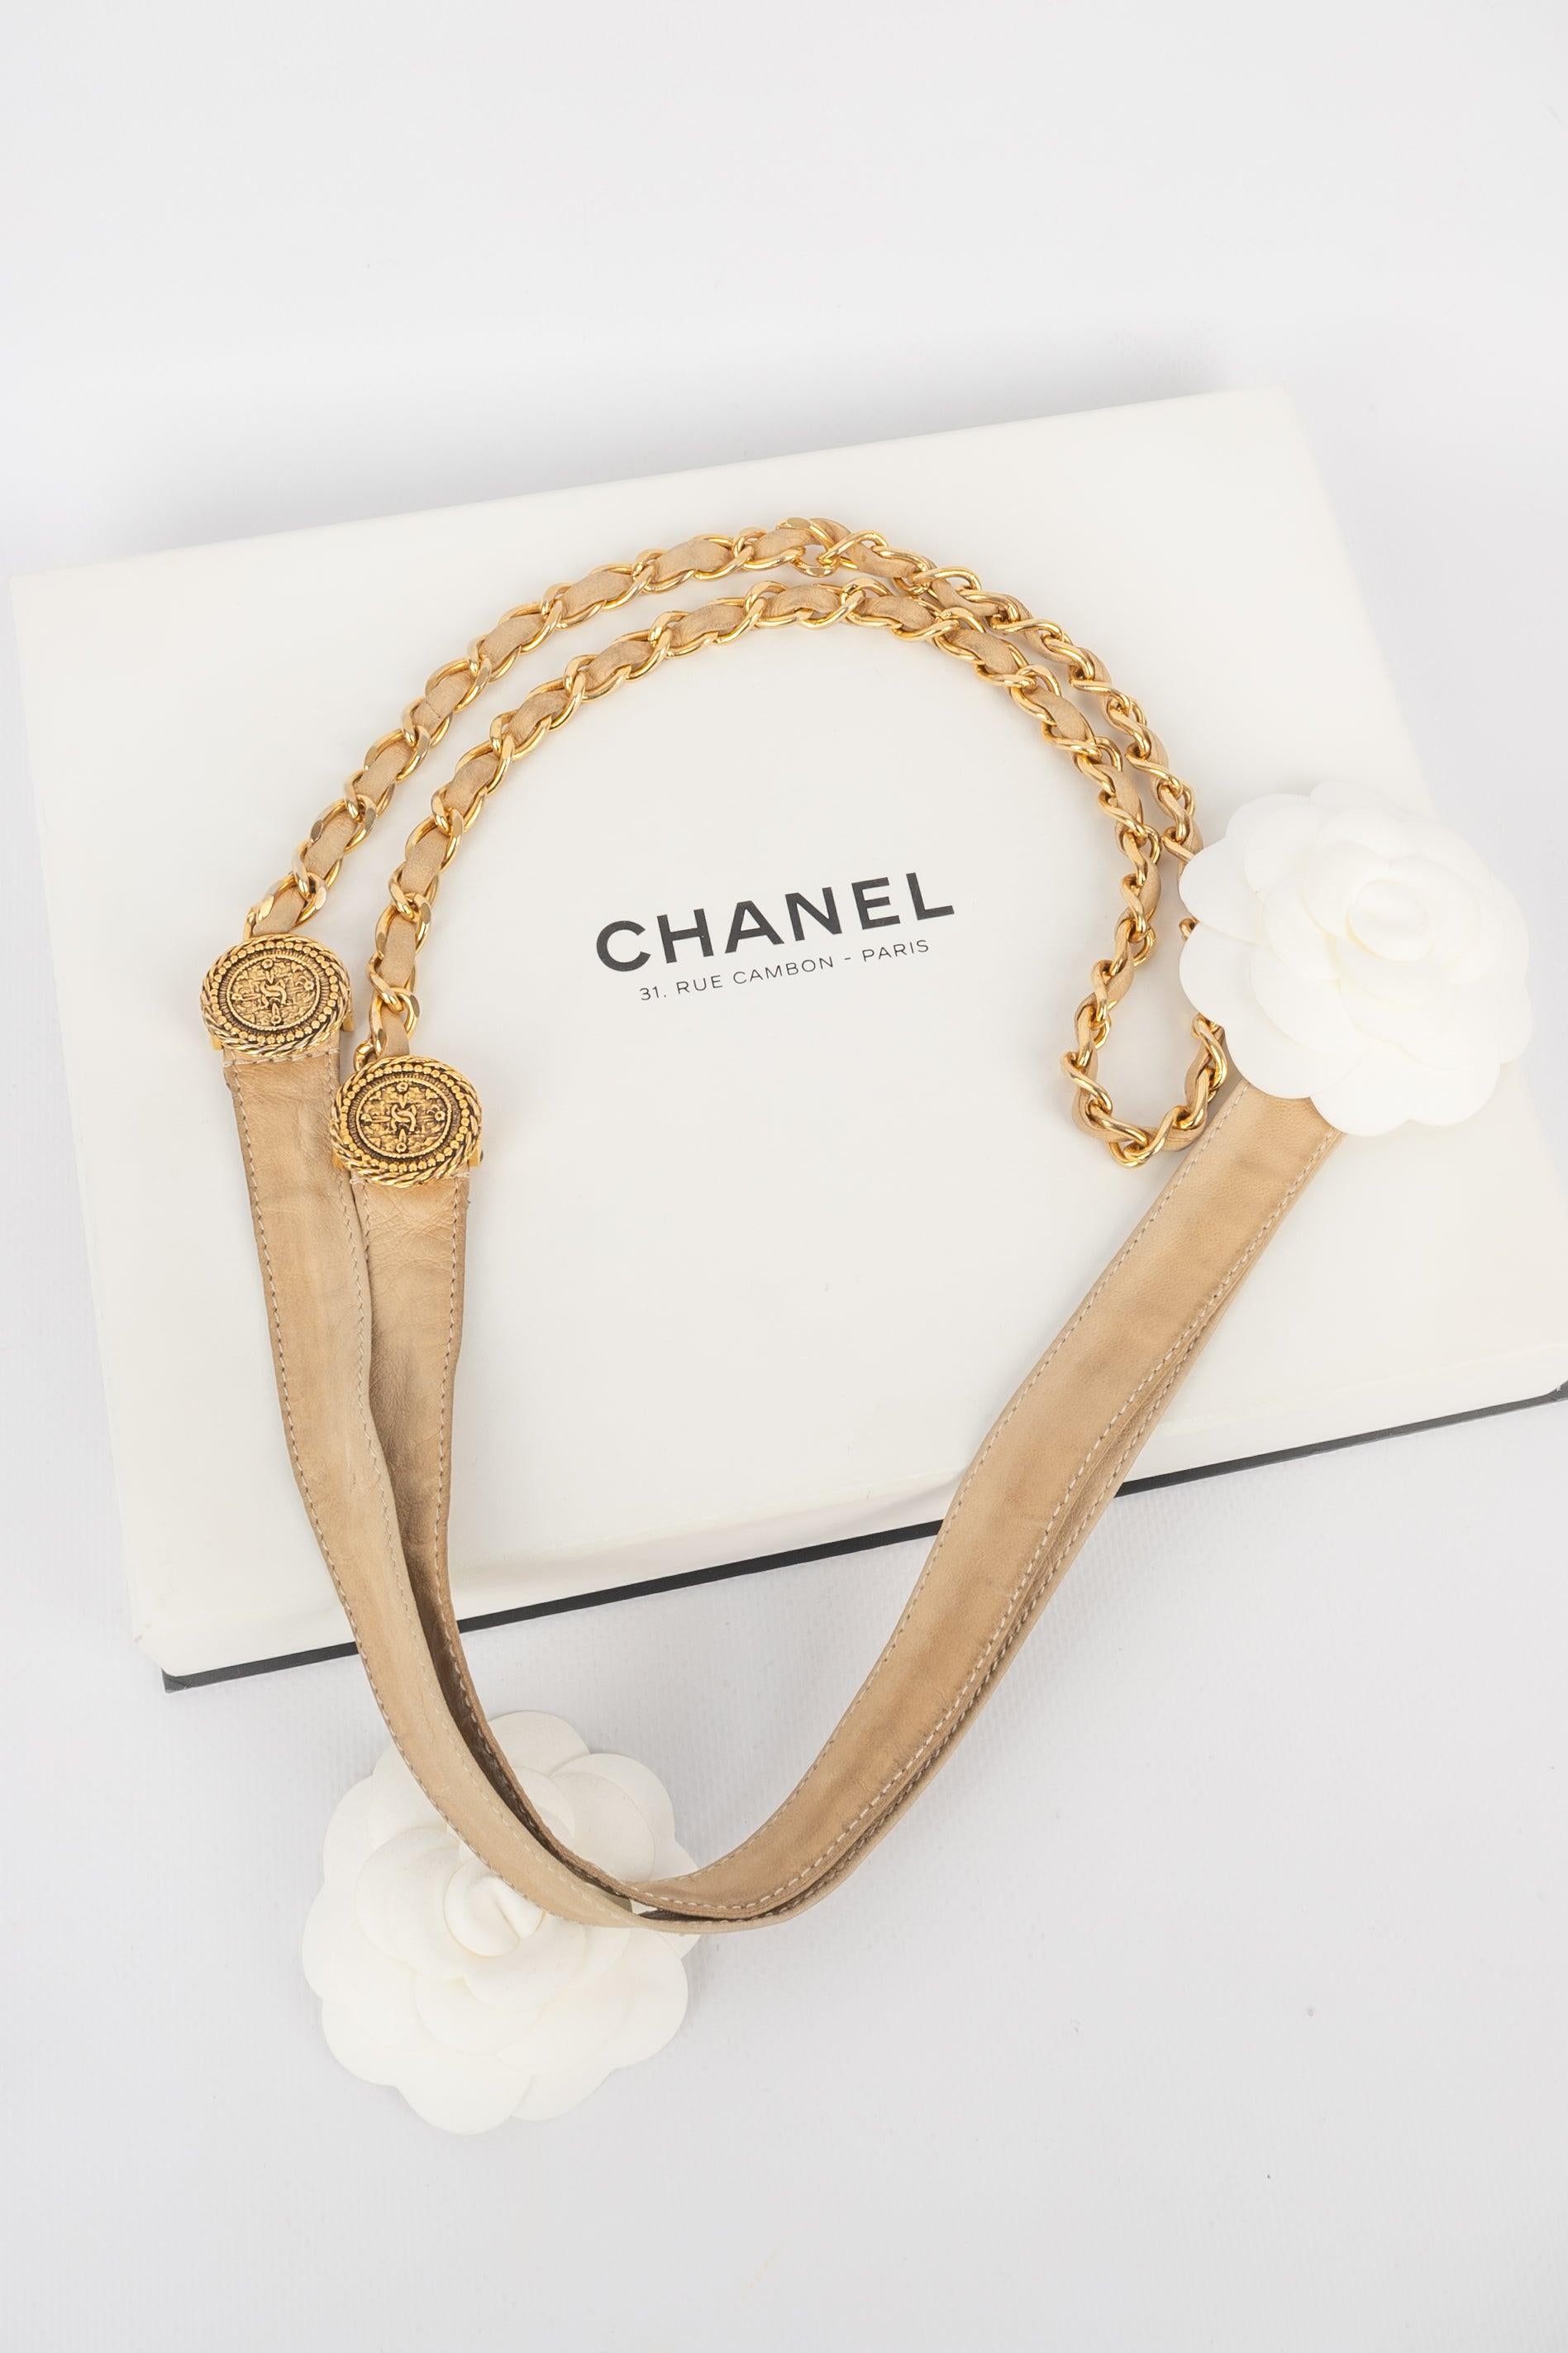 Chanel Beige Leather Belt In Good Condition For Sale In SAINT-OUEN-SUR-SEINE, FR